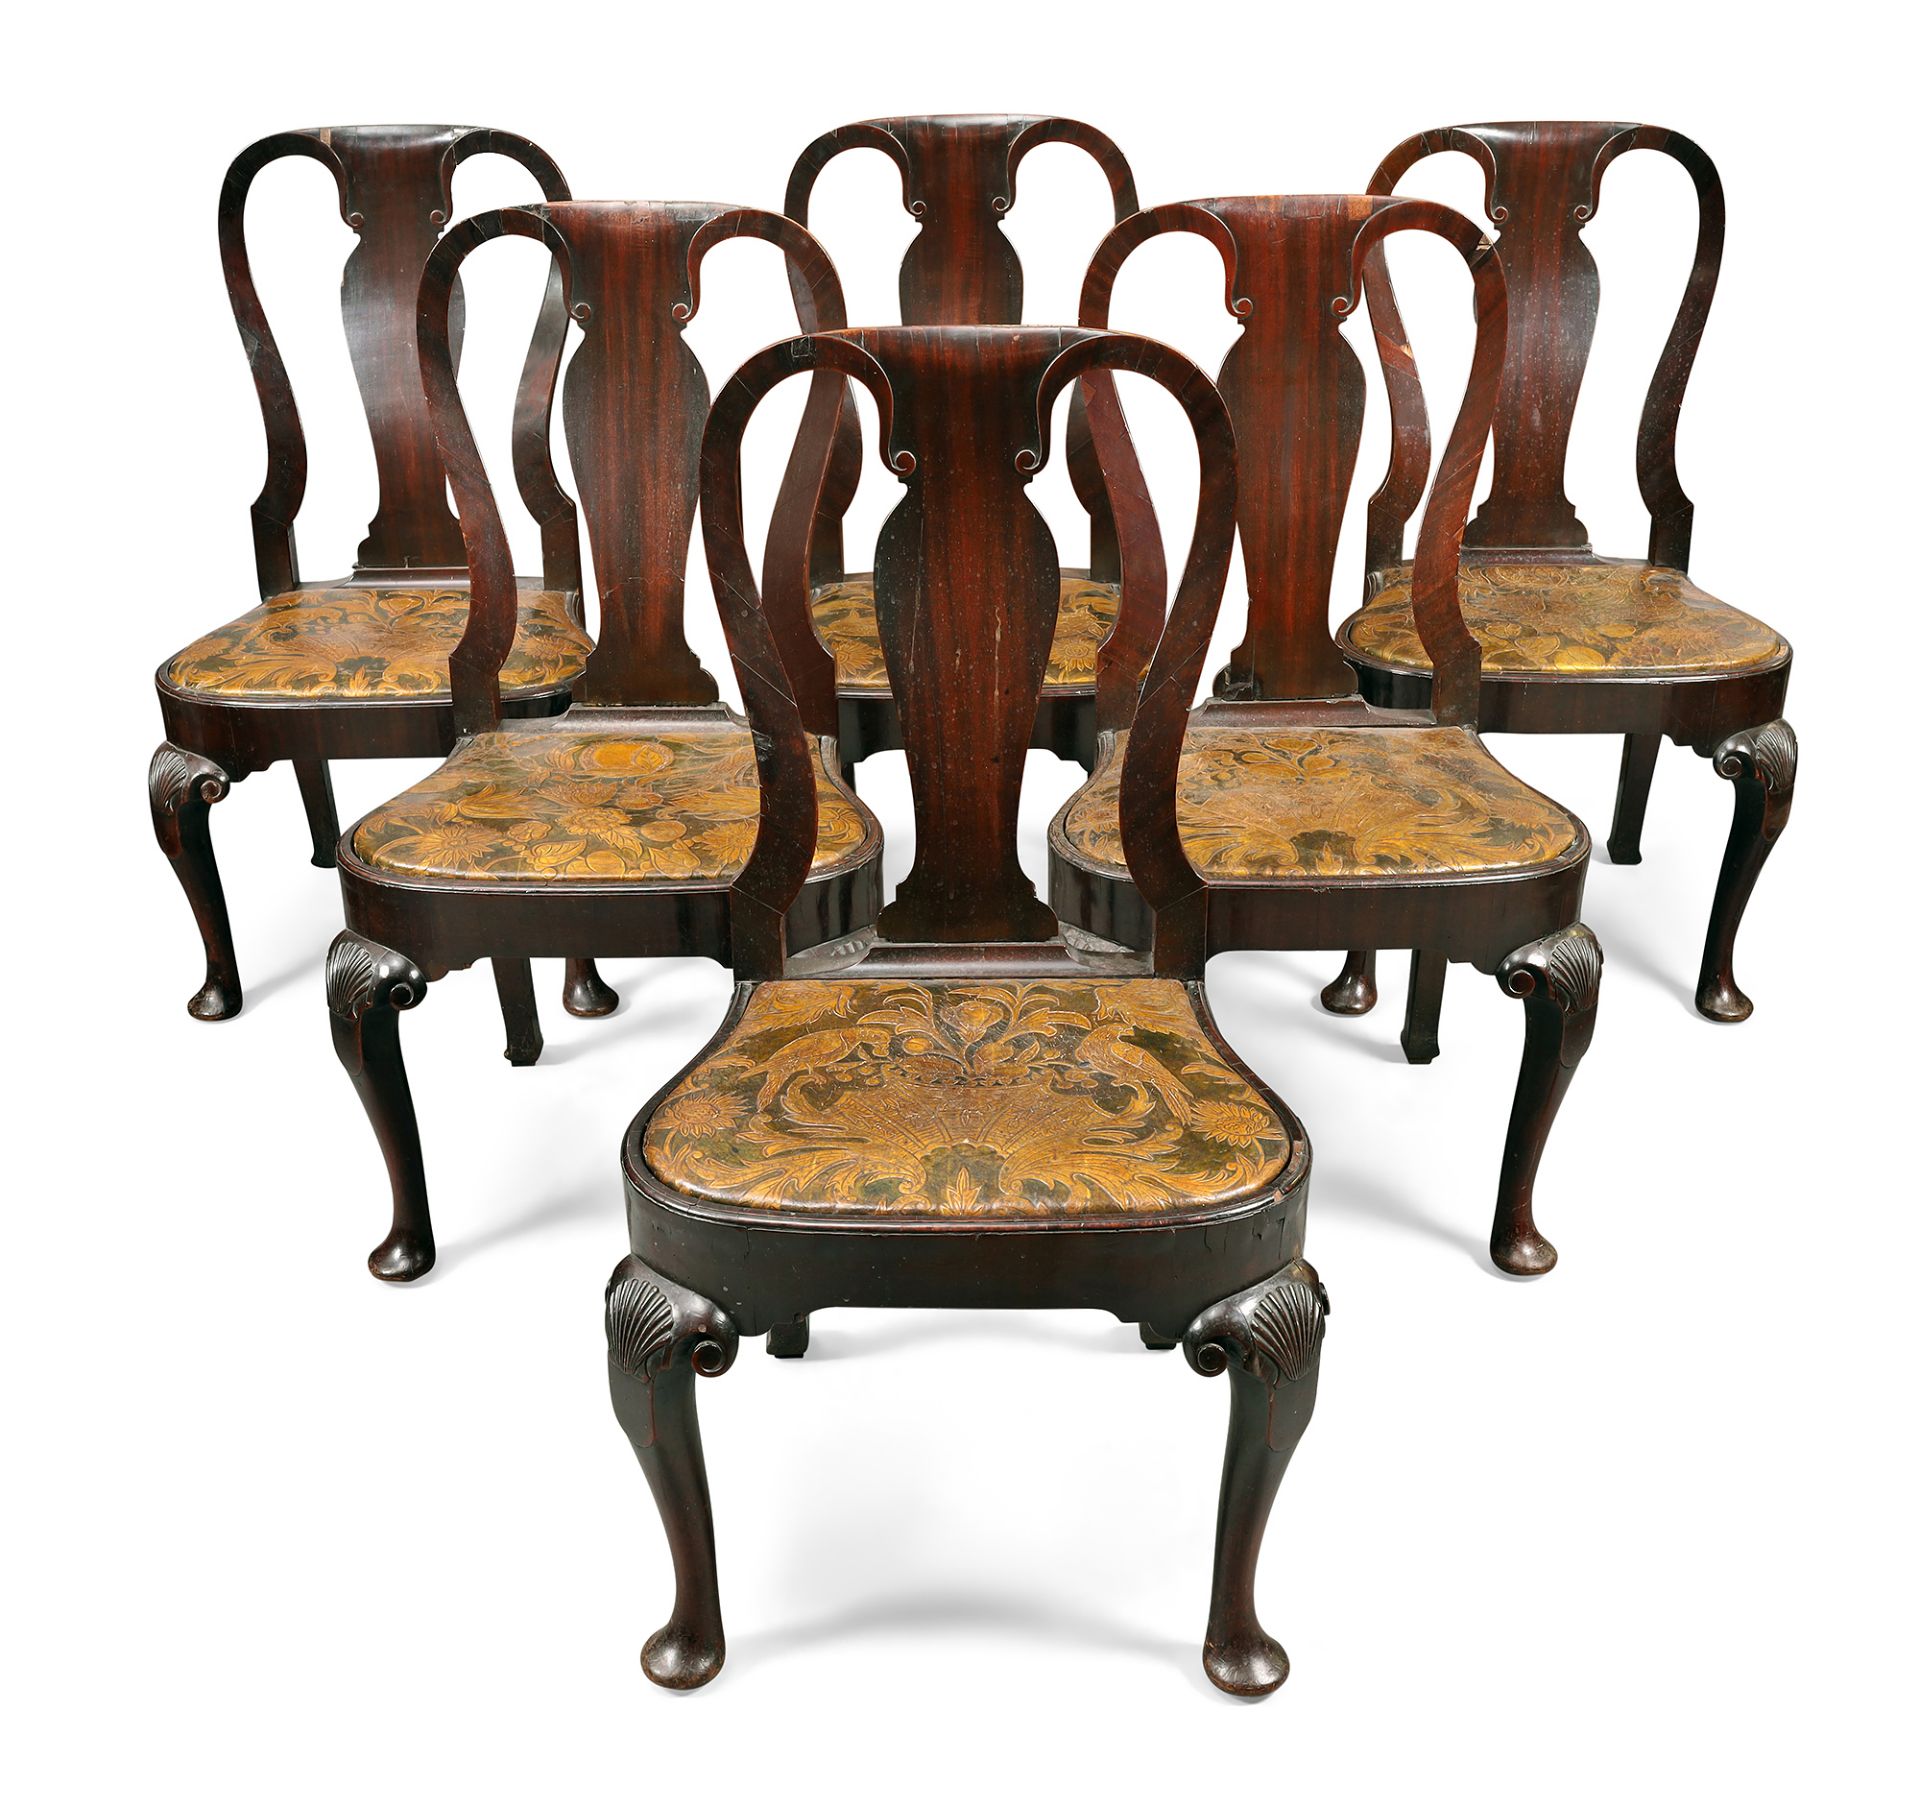 A set of six George II walnut dining chairs, second quarter 18th century, possibly Irish, the sha...